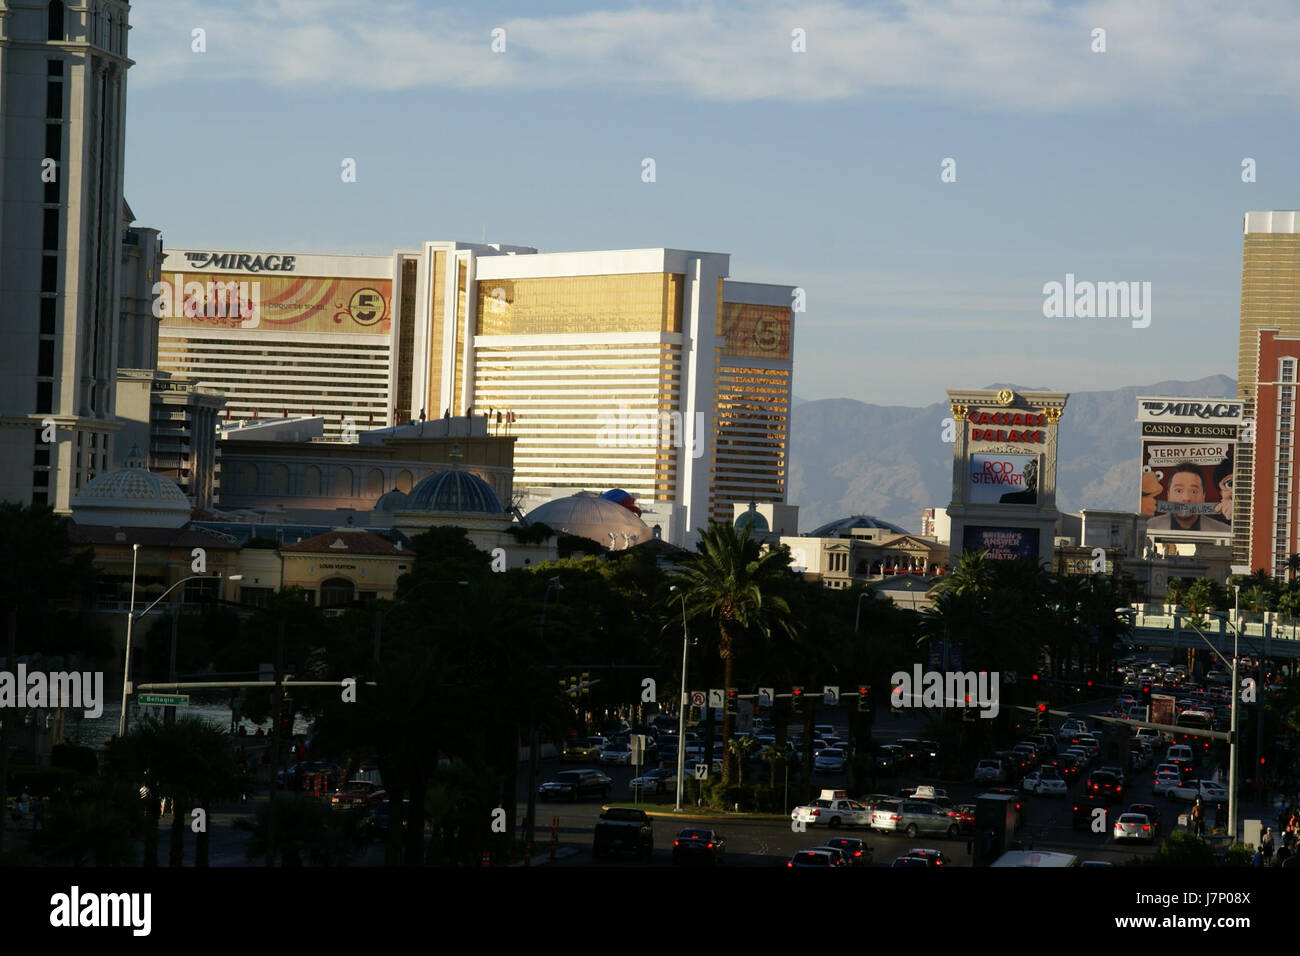 2012.10.04.171943 The Mirage Hotel Las Vegas Nevada Stock Photo